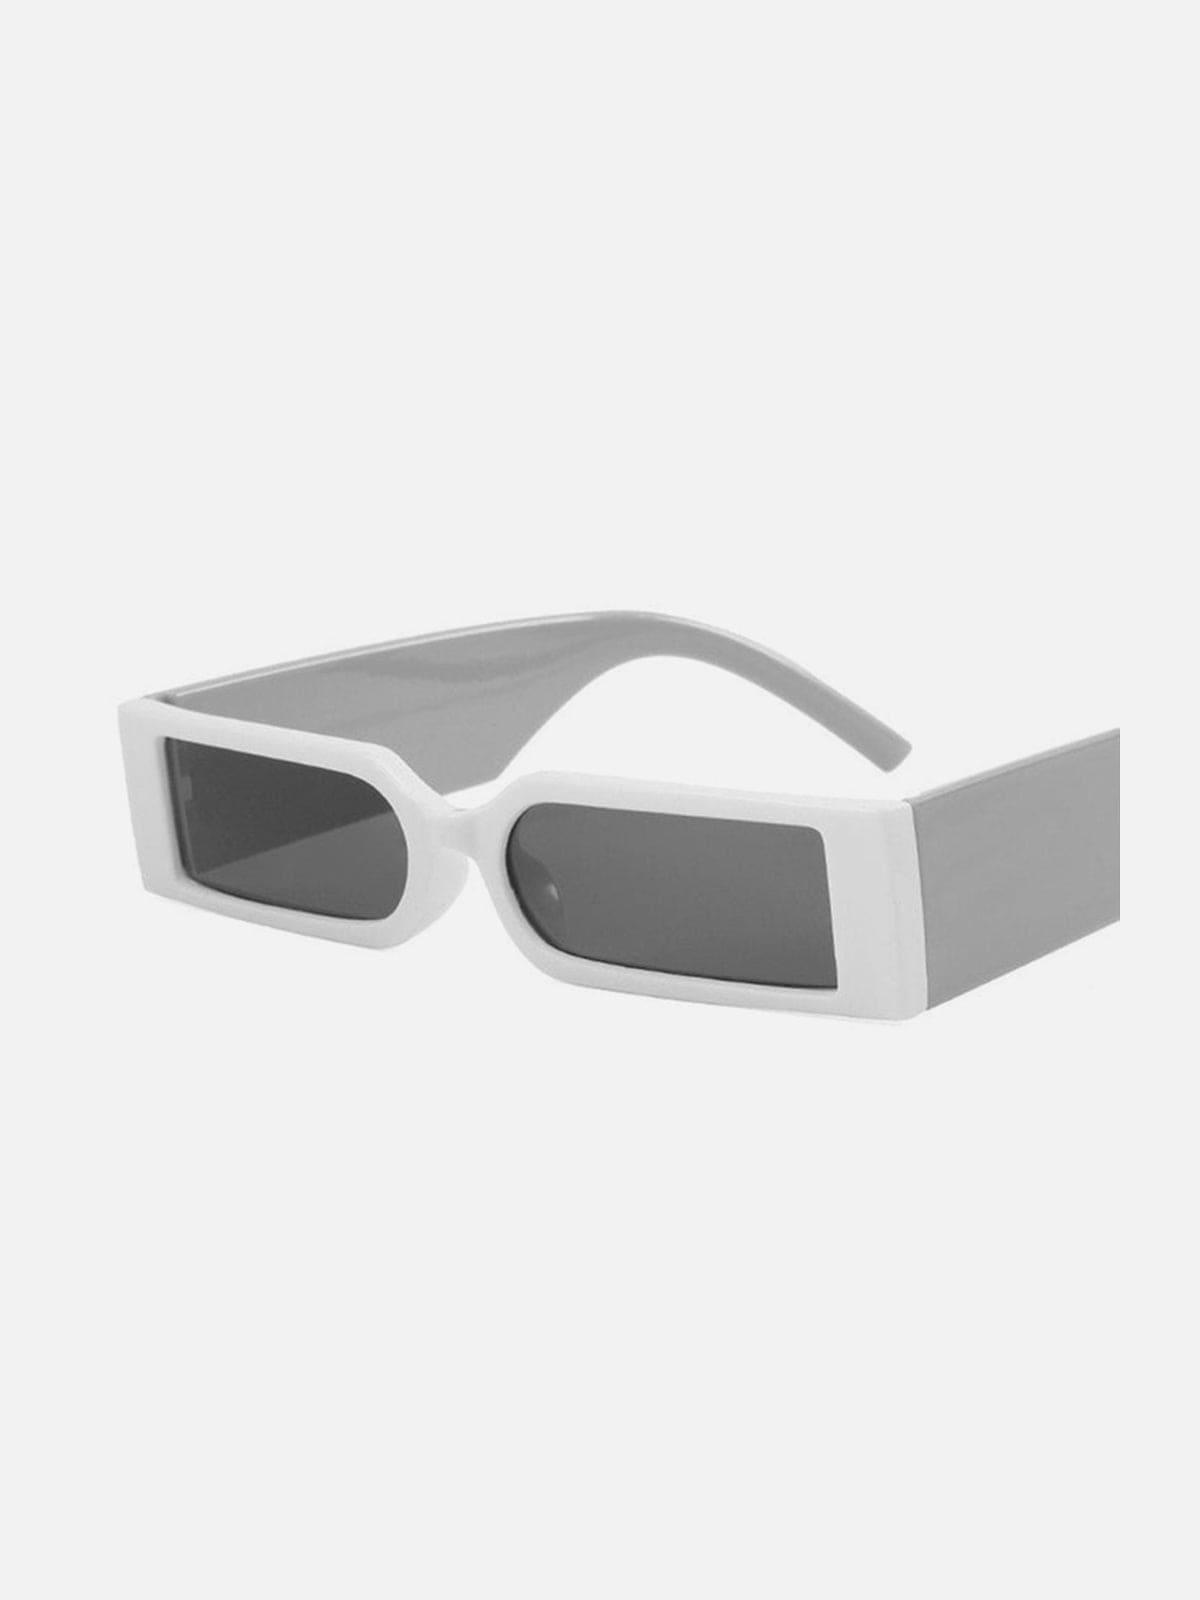 NEV Cyberpunk Narrow Square Glasses